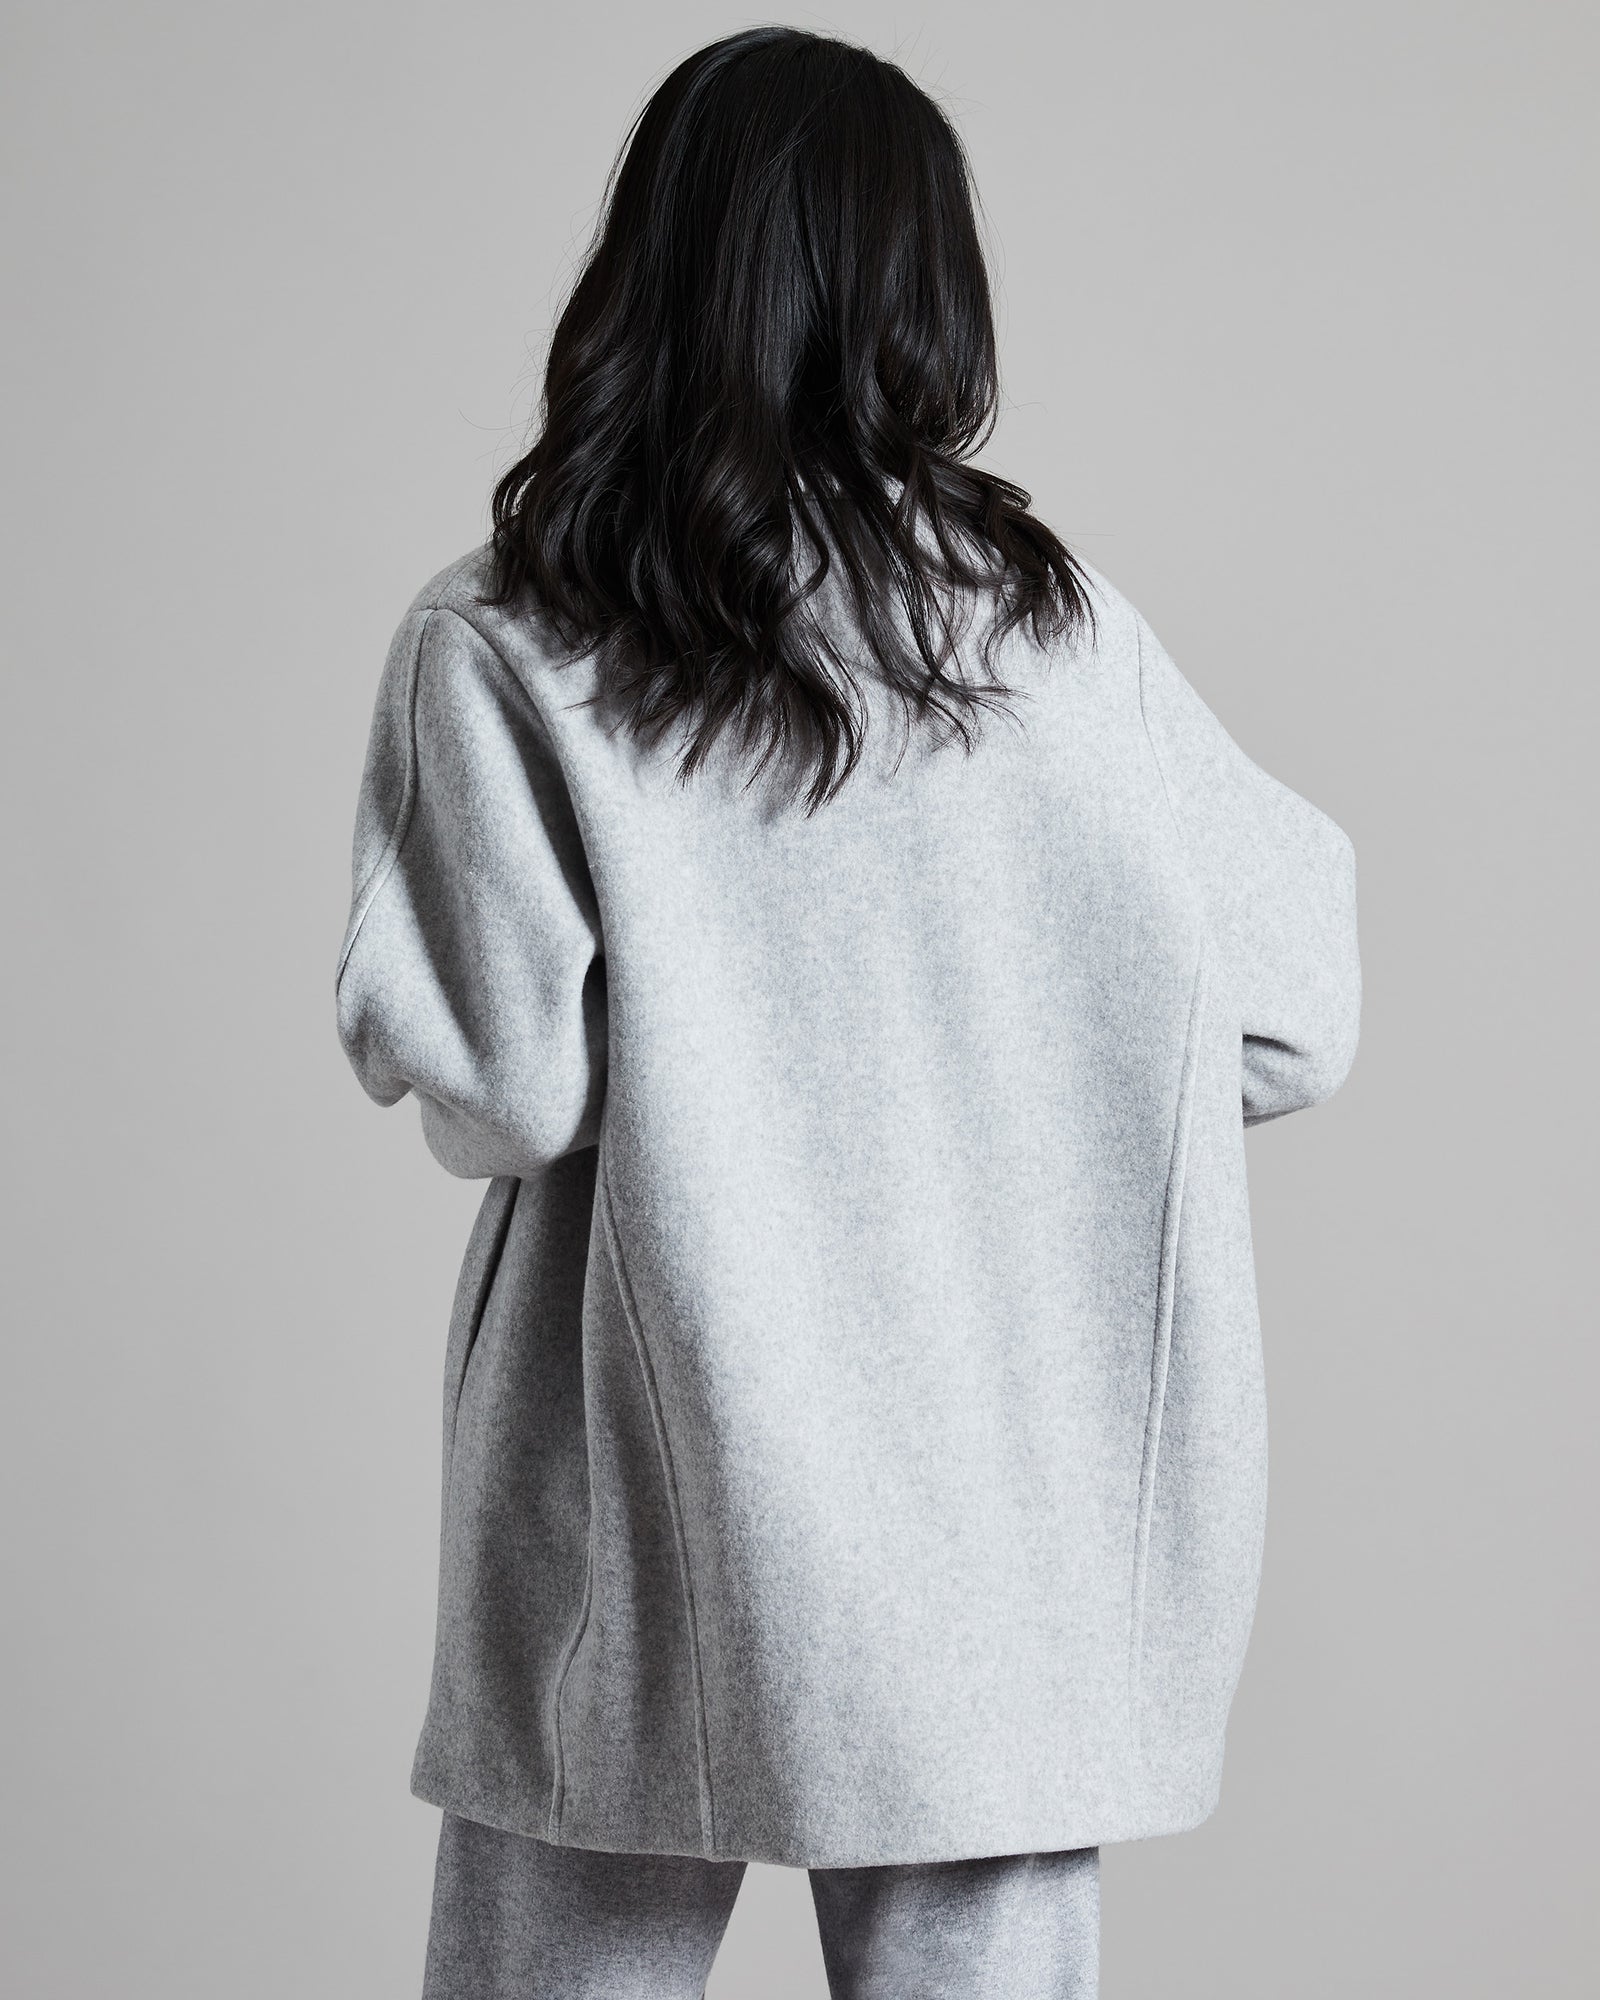 Outerwear in cashmere fleece